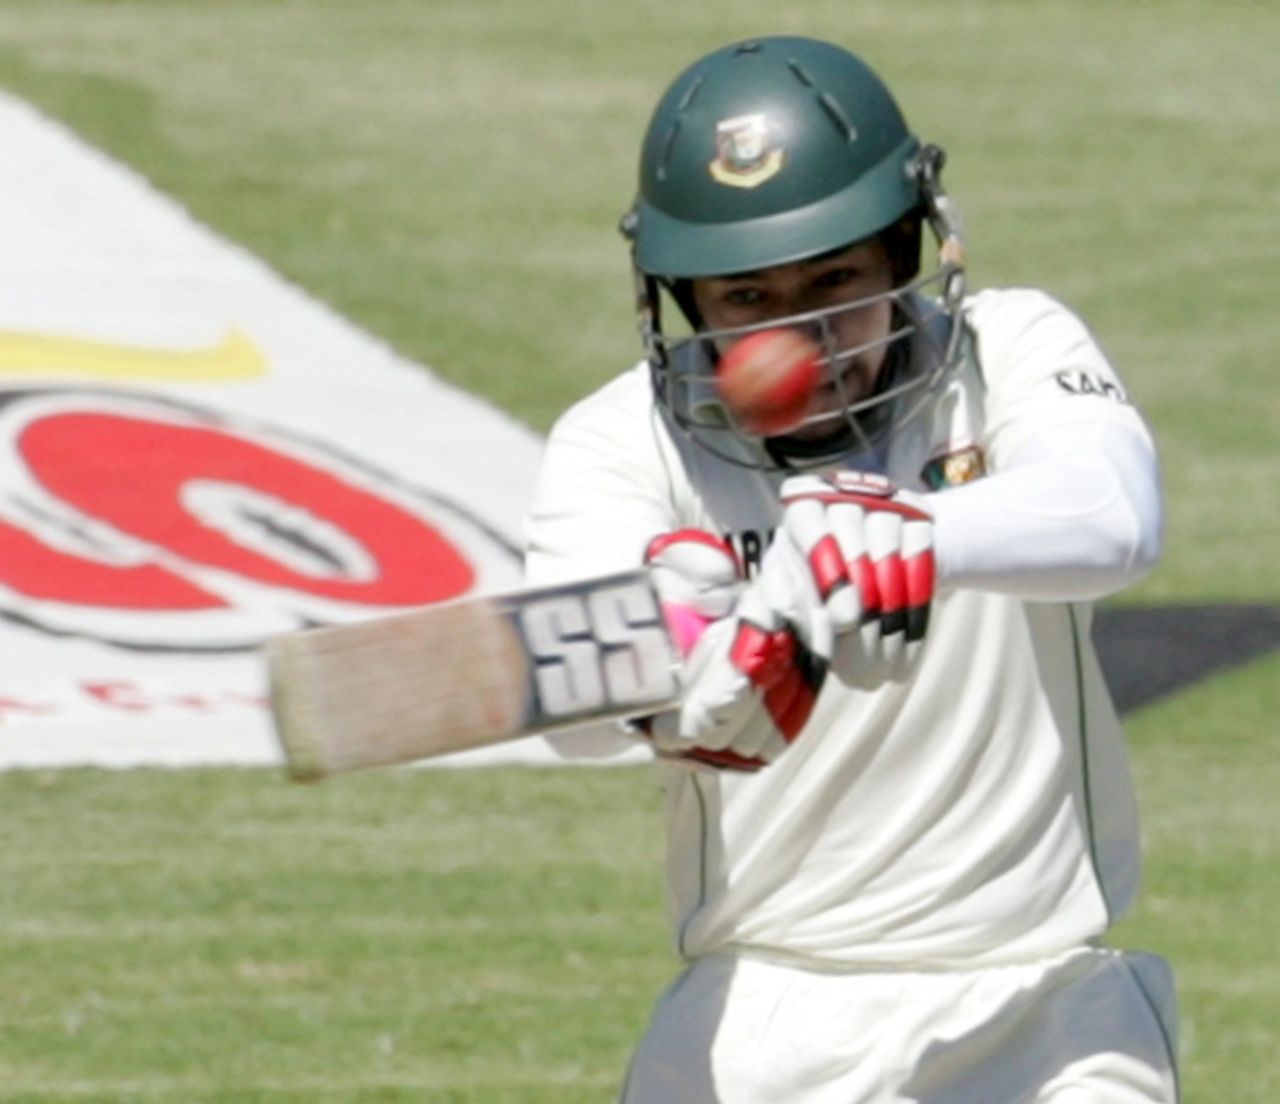 Mushfiqur Rahim tries to pull, Zimbabwe v Bangladesh, 2nd Test, Harare, 4th day, April 28, 2013